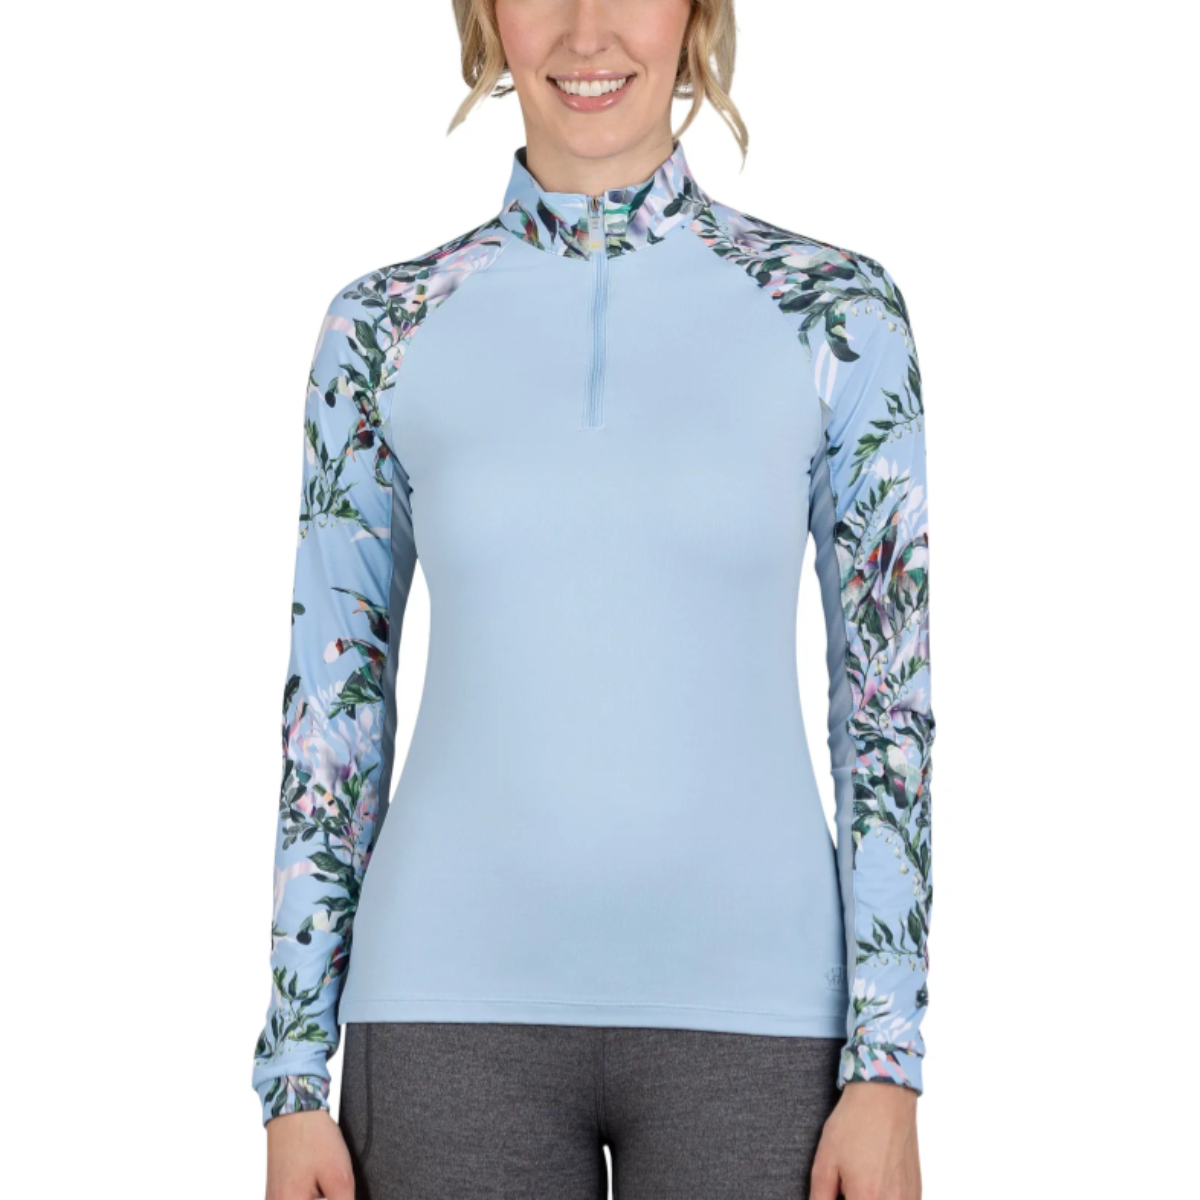 Kastel Long Sleeve 1/4 Zip Raglan Shirt in Canal Blue/Florals